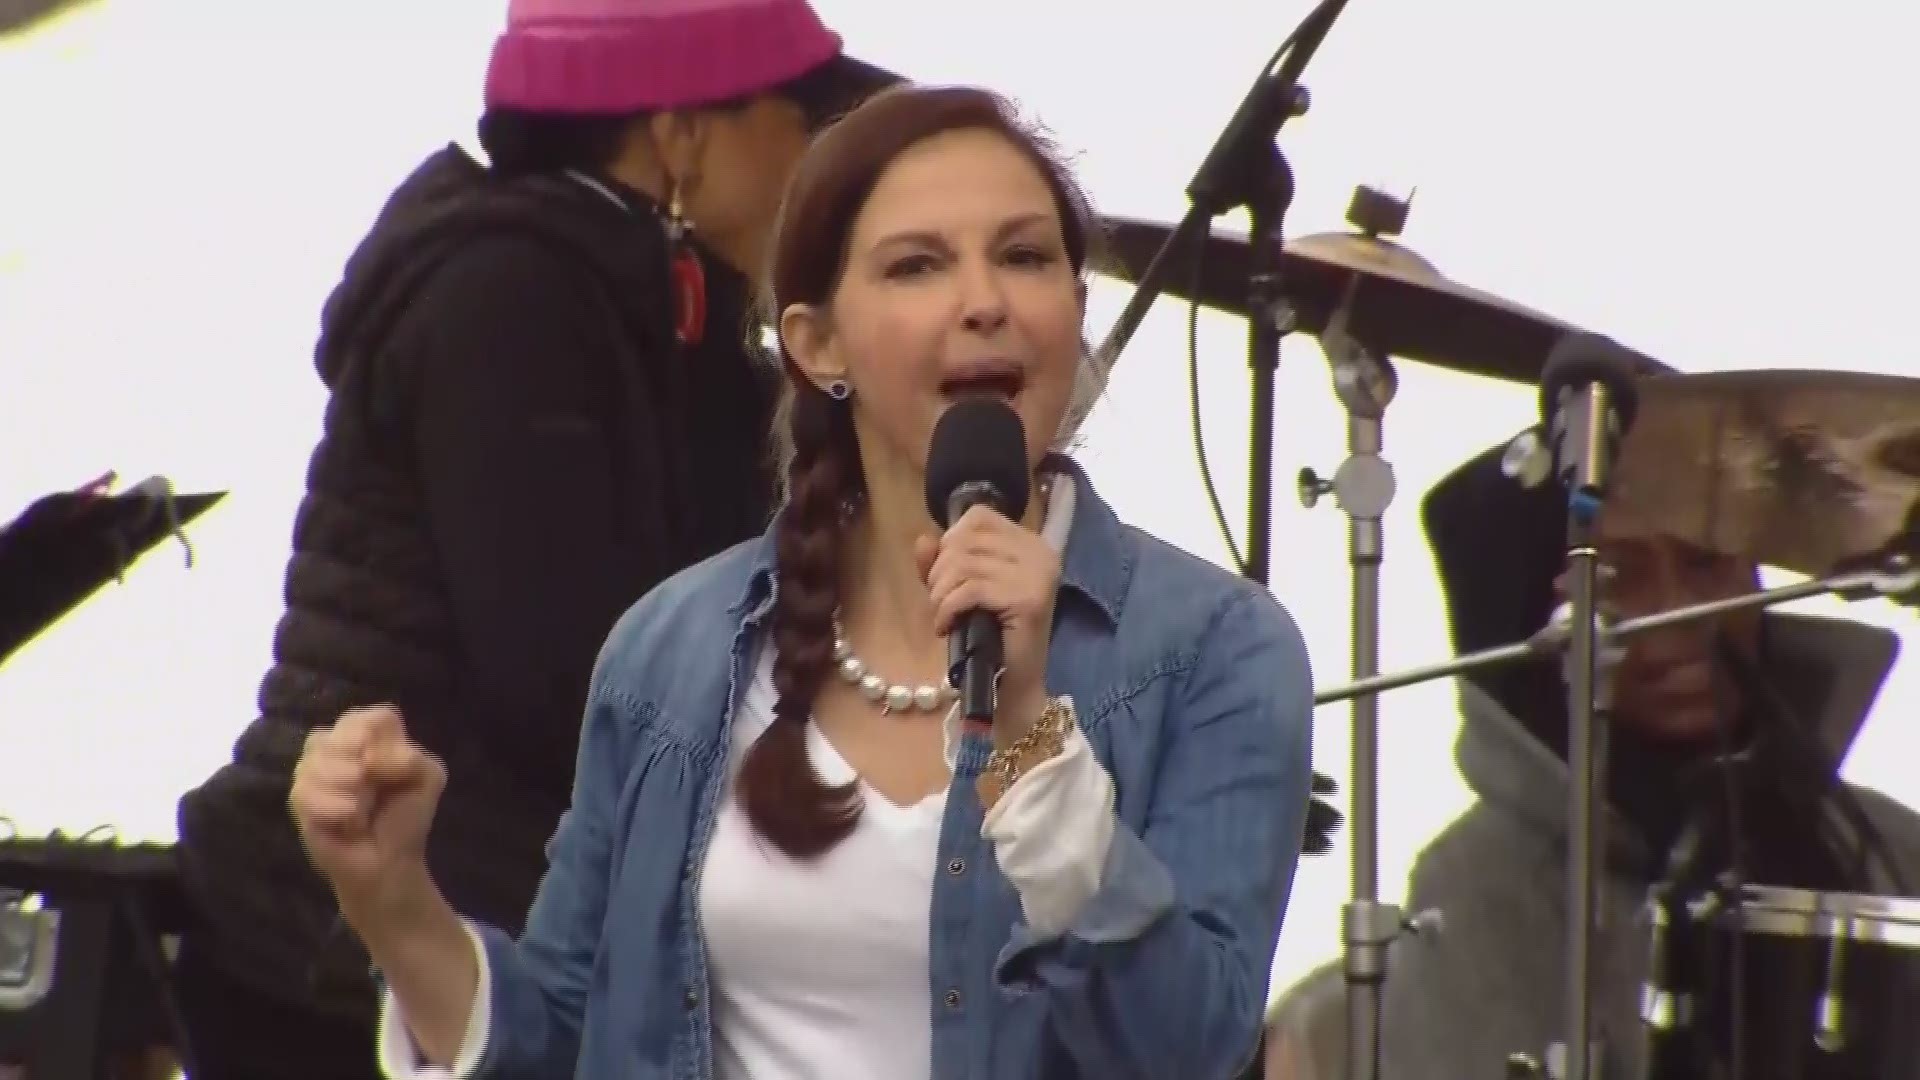 Ashley Judd's speech at Women's March on Washington